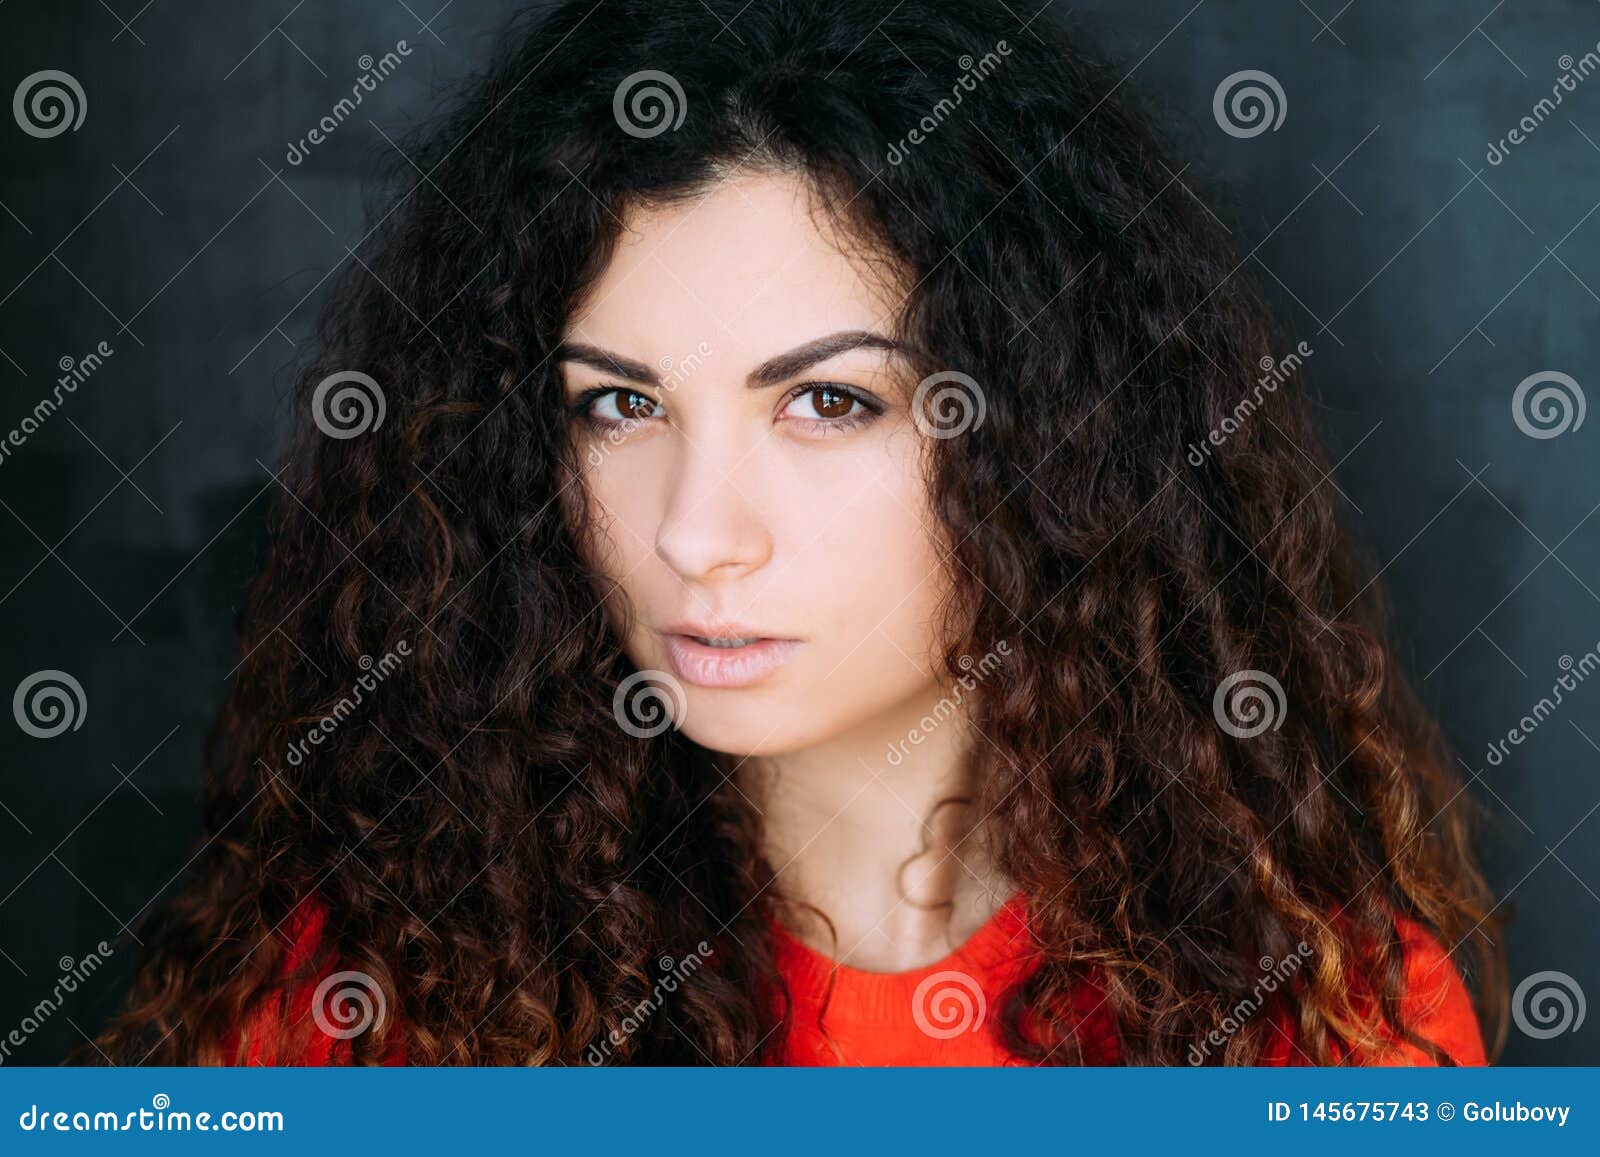 Young Woman Suspicion Skepticism Doubt Expression Stock Image - Image ...